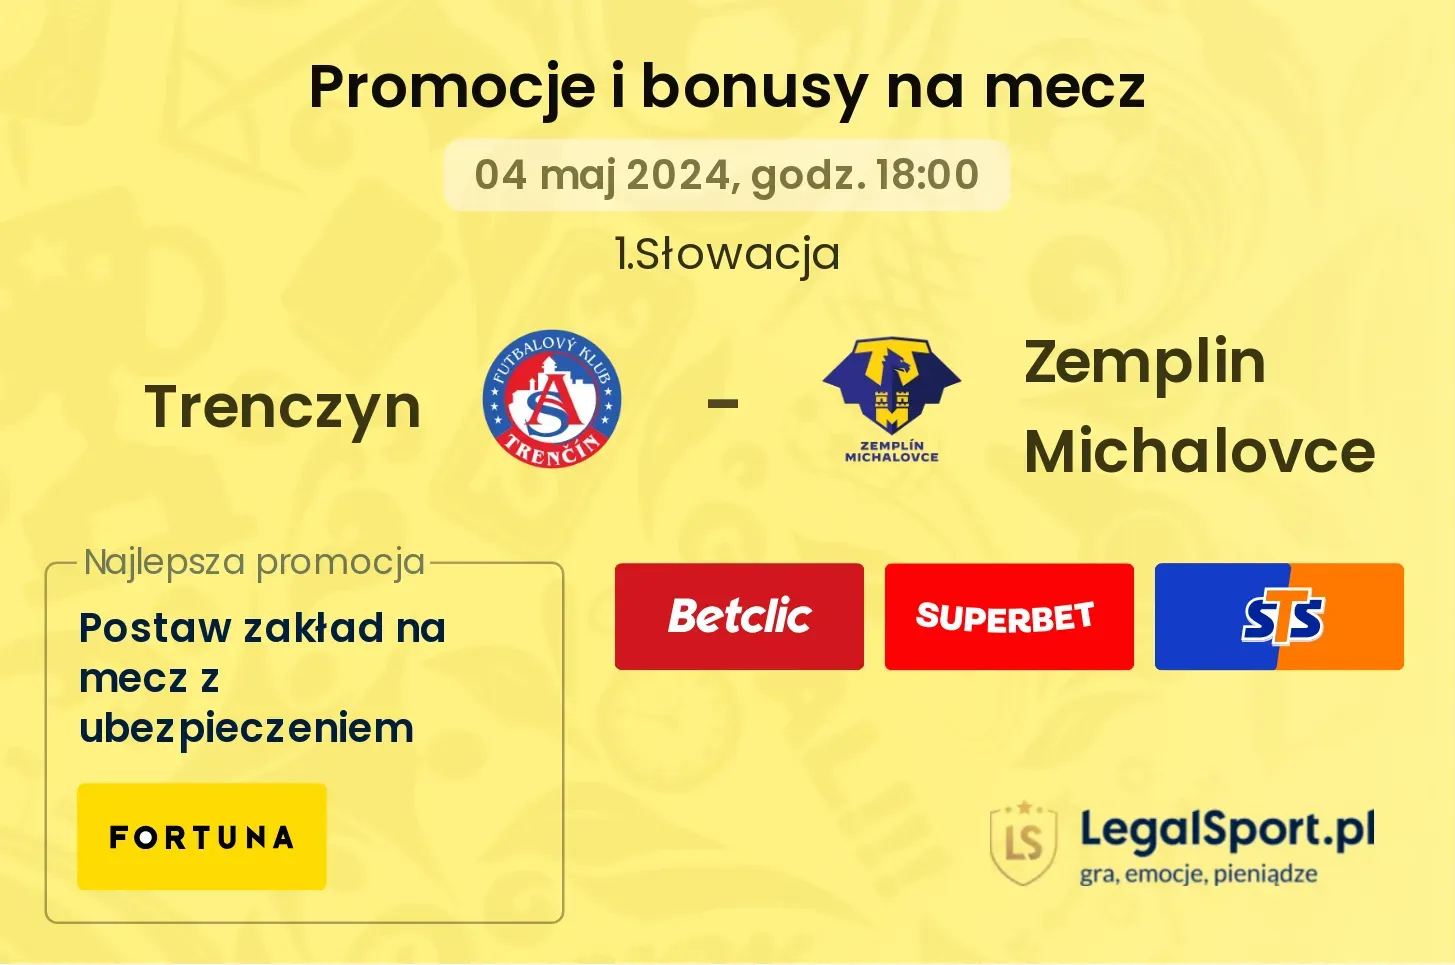 Trenczyn - Zemplin Michalovce promocje bonusy na mecz